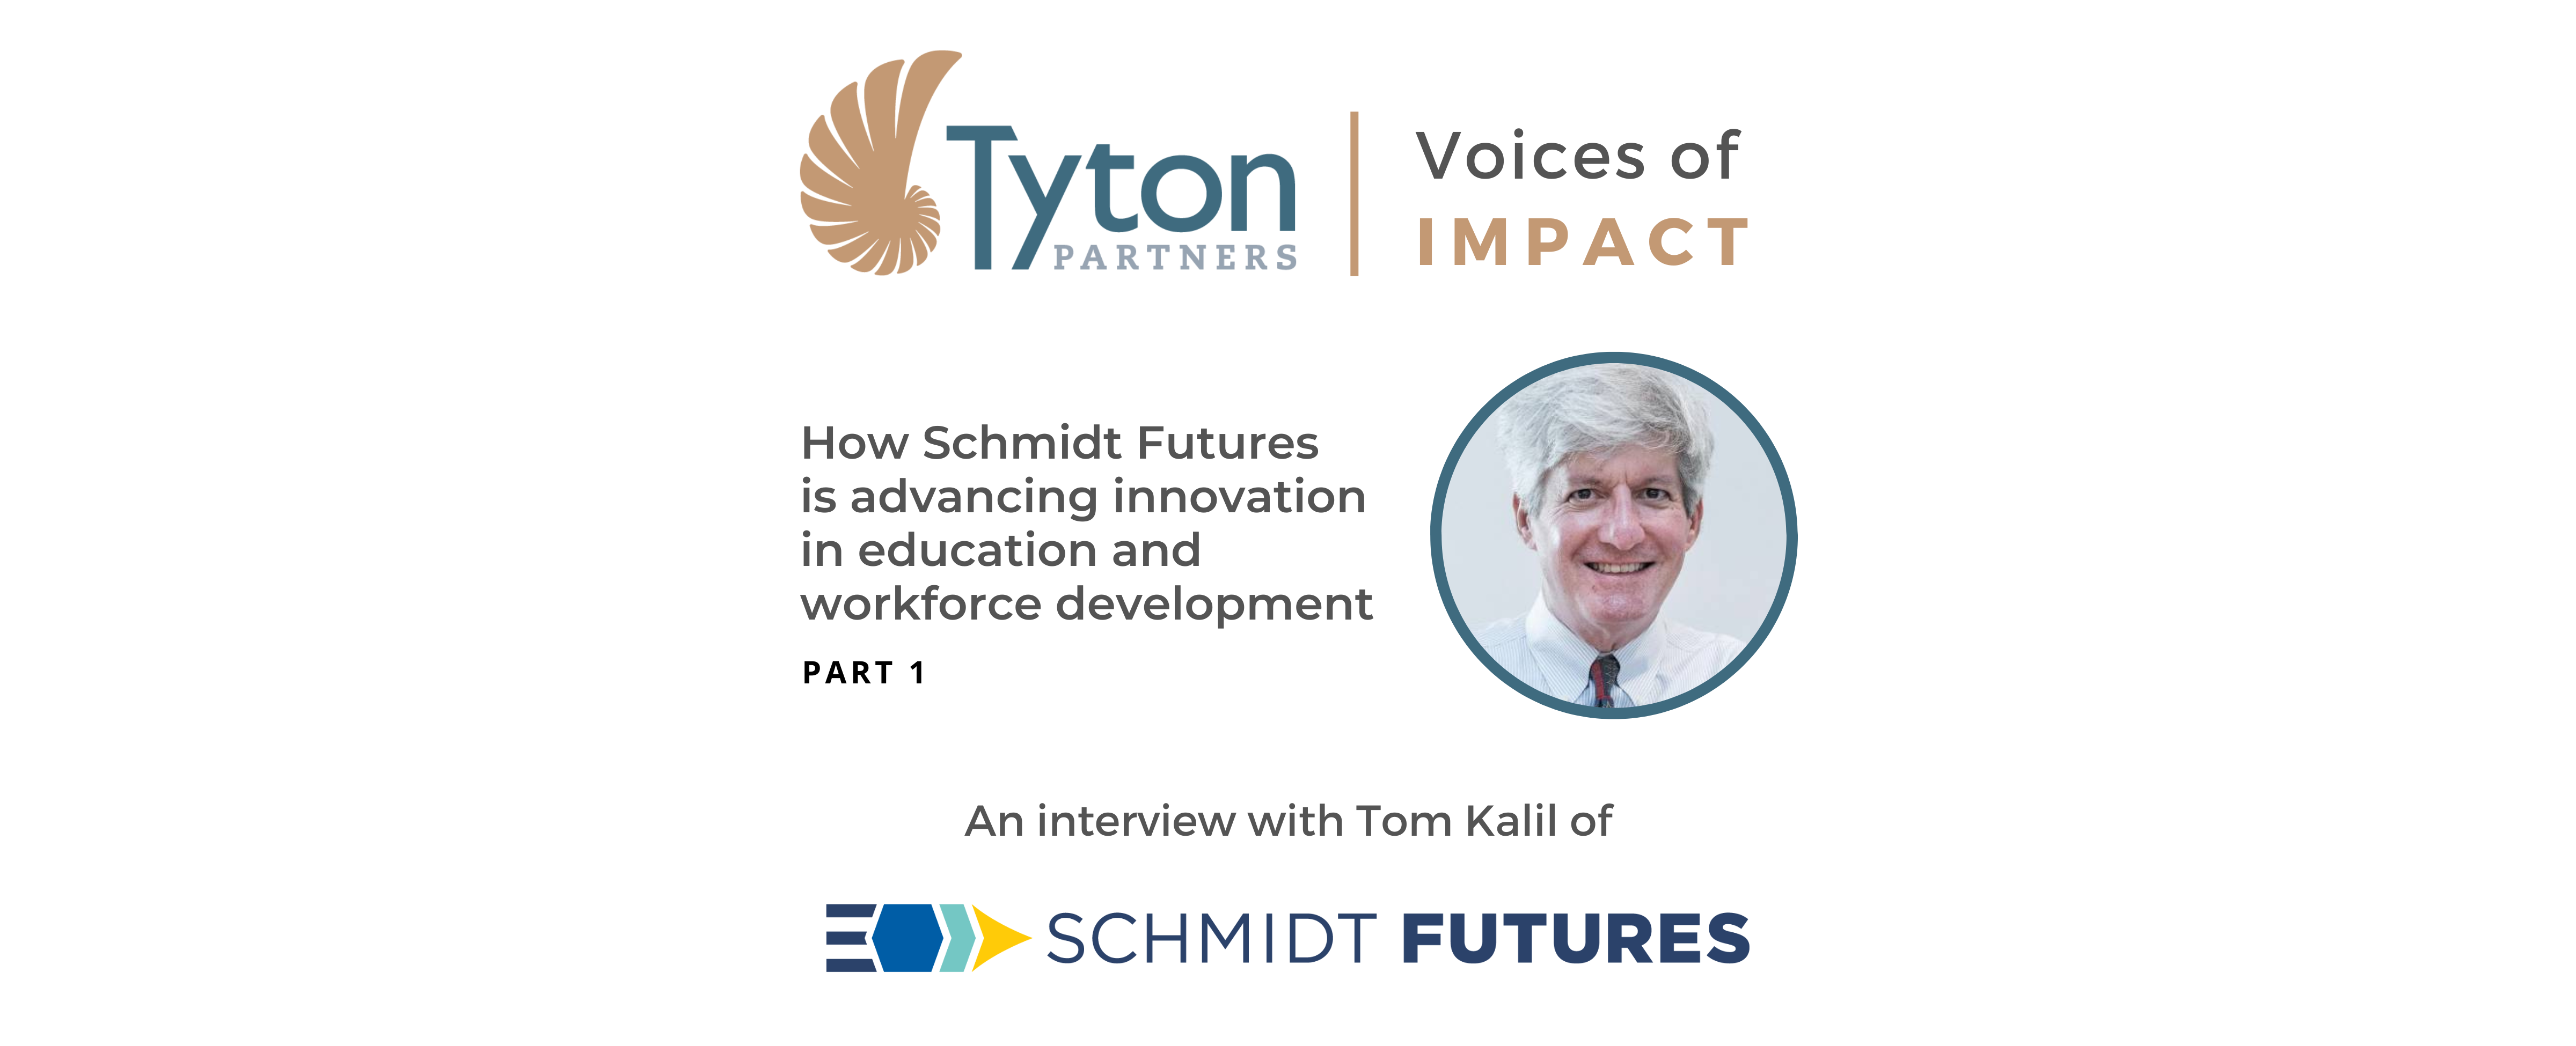 Tyton Partners Voices of Impact: Tom Kalil of Schmidt Futures part 1